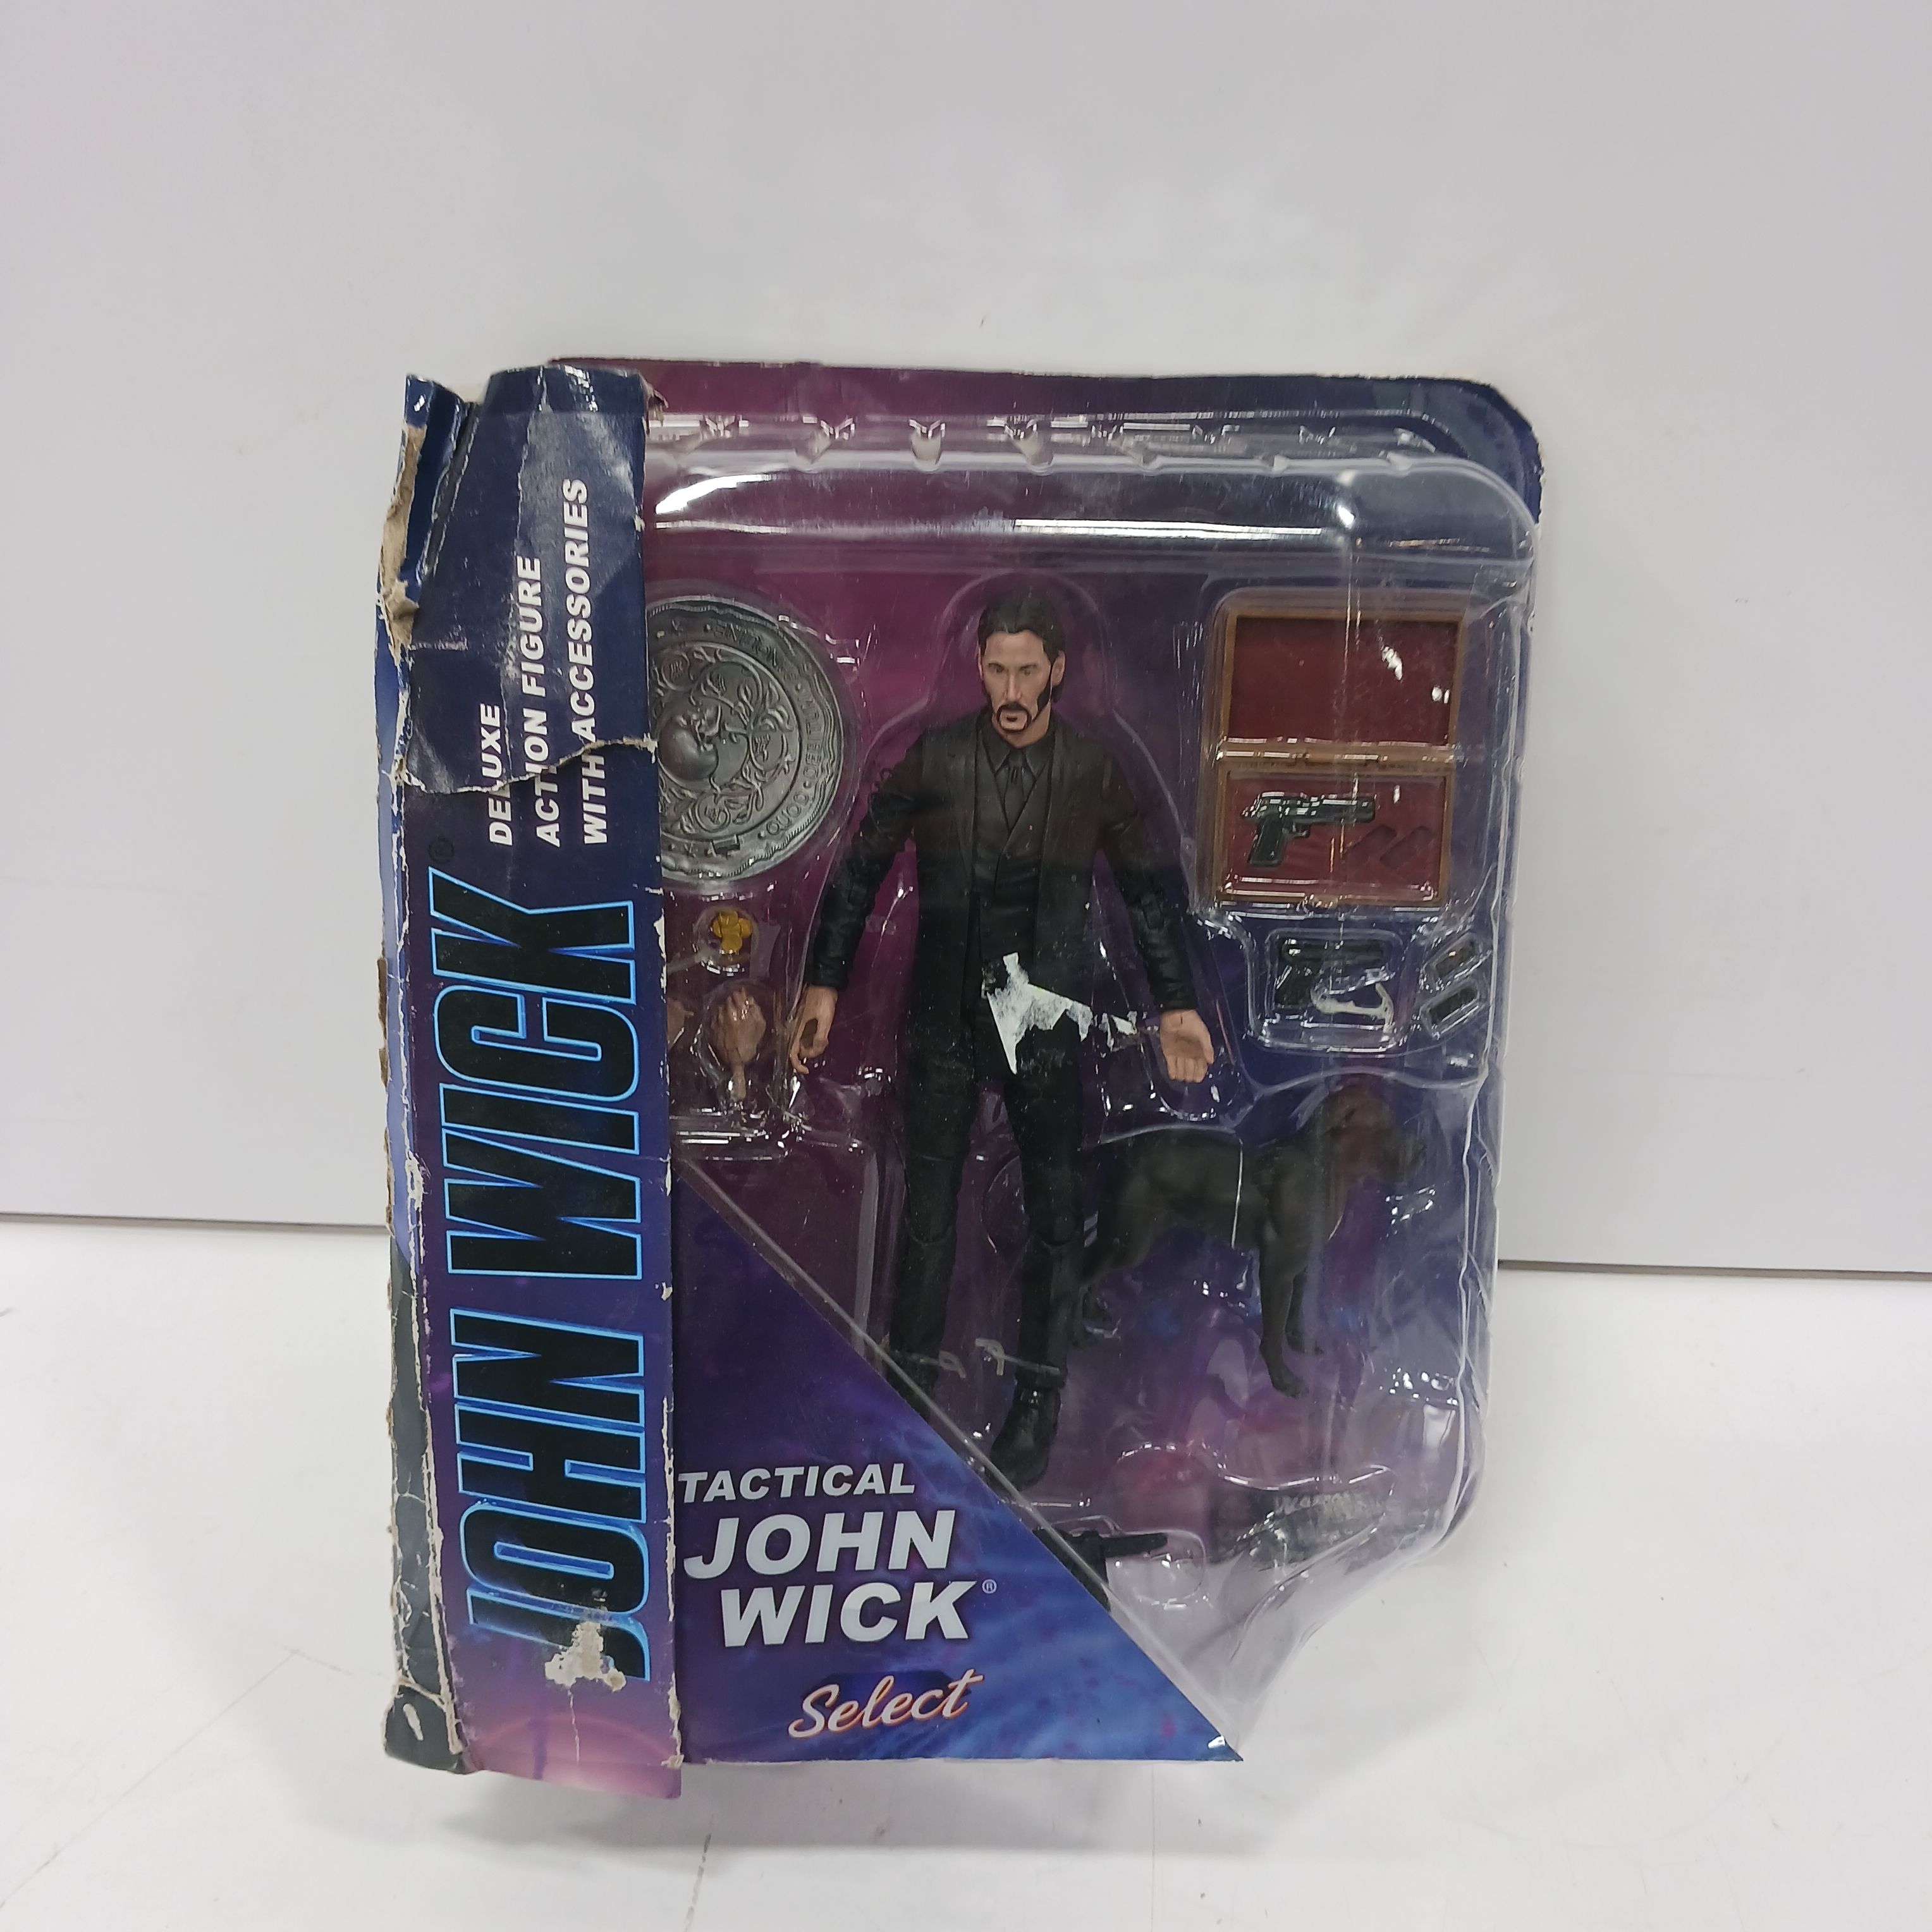 Diamond Select Toys John Wick John Wick Deluxe Box Set Action Figure - US